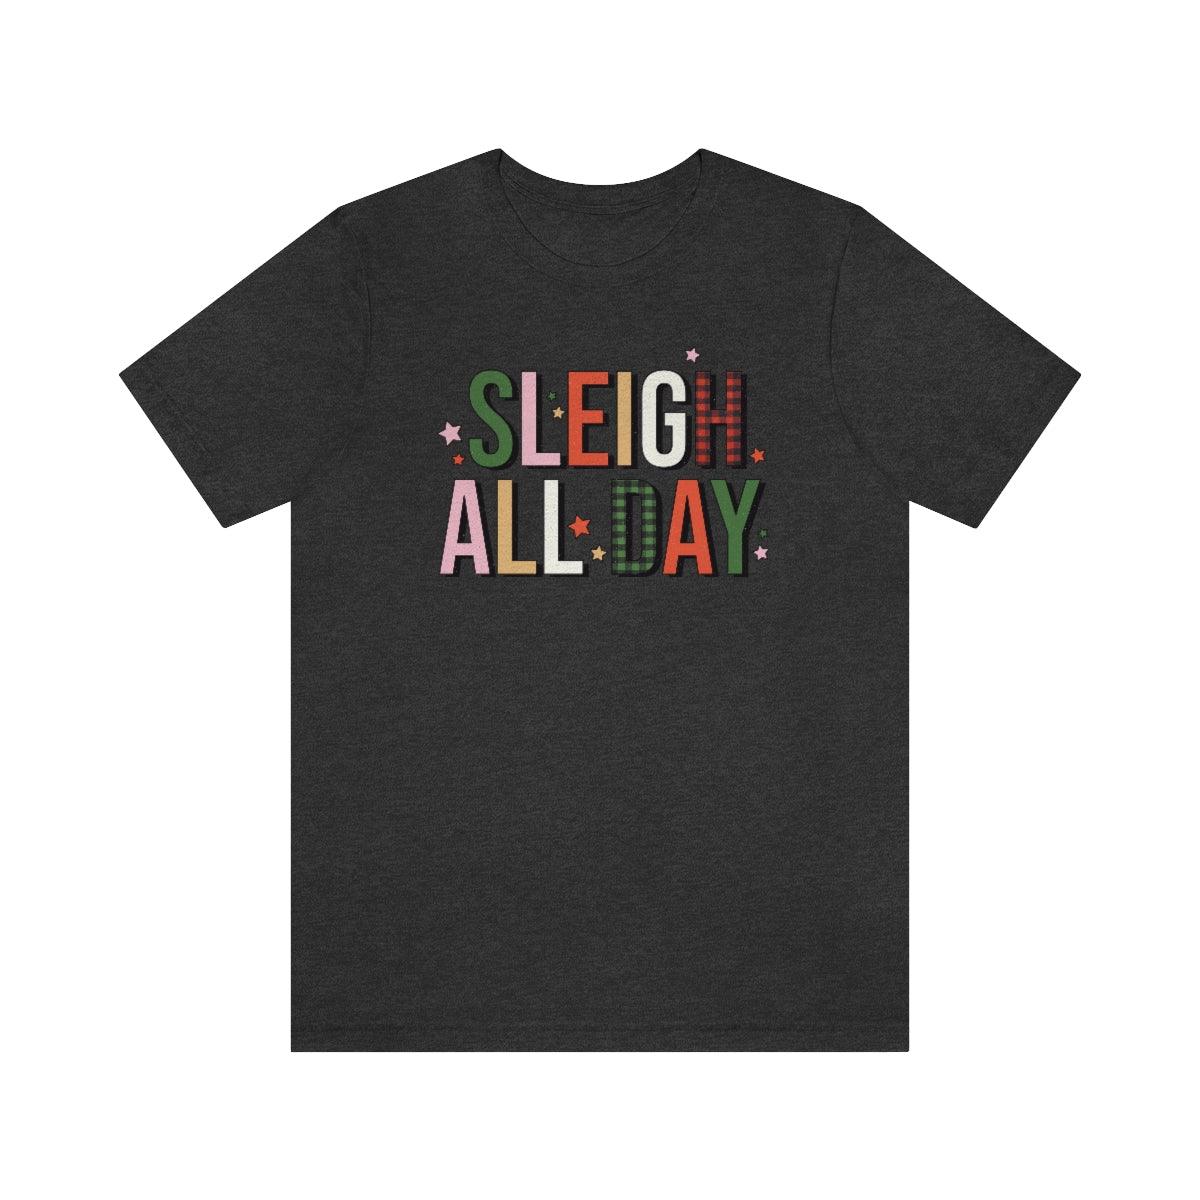 Sleigh All Day Christmas Shirt Short Sleeve Tee - Crystal Rose Design Co.